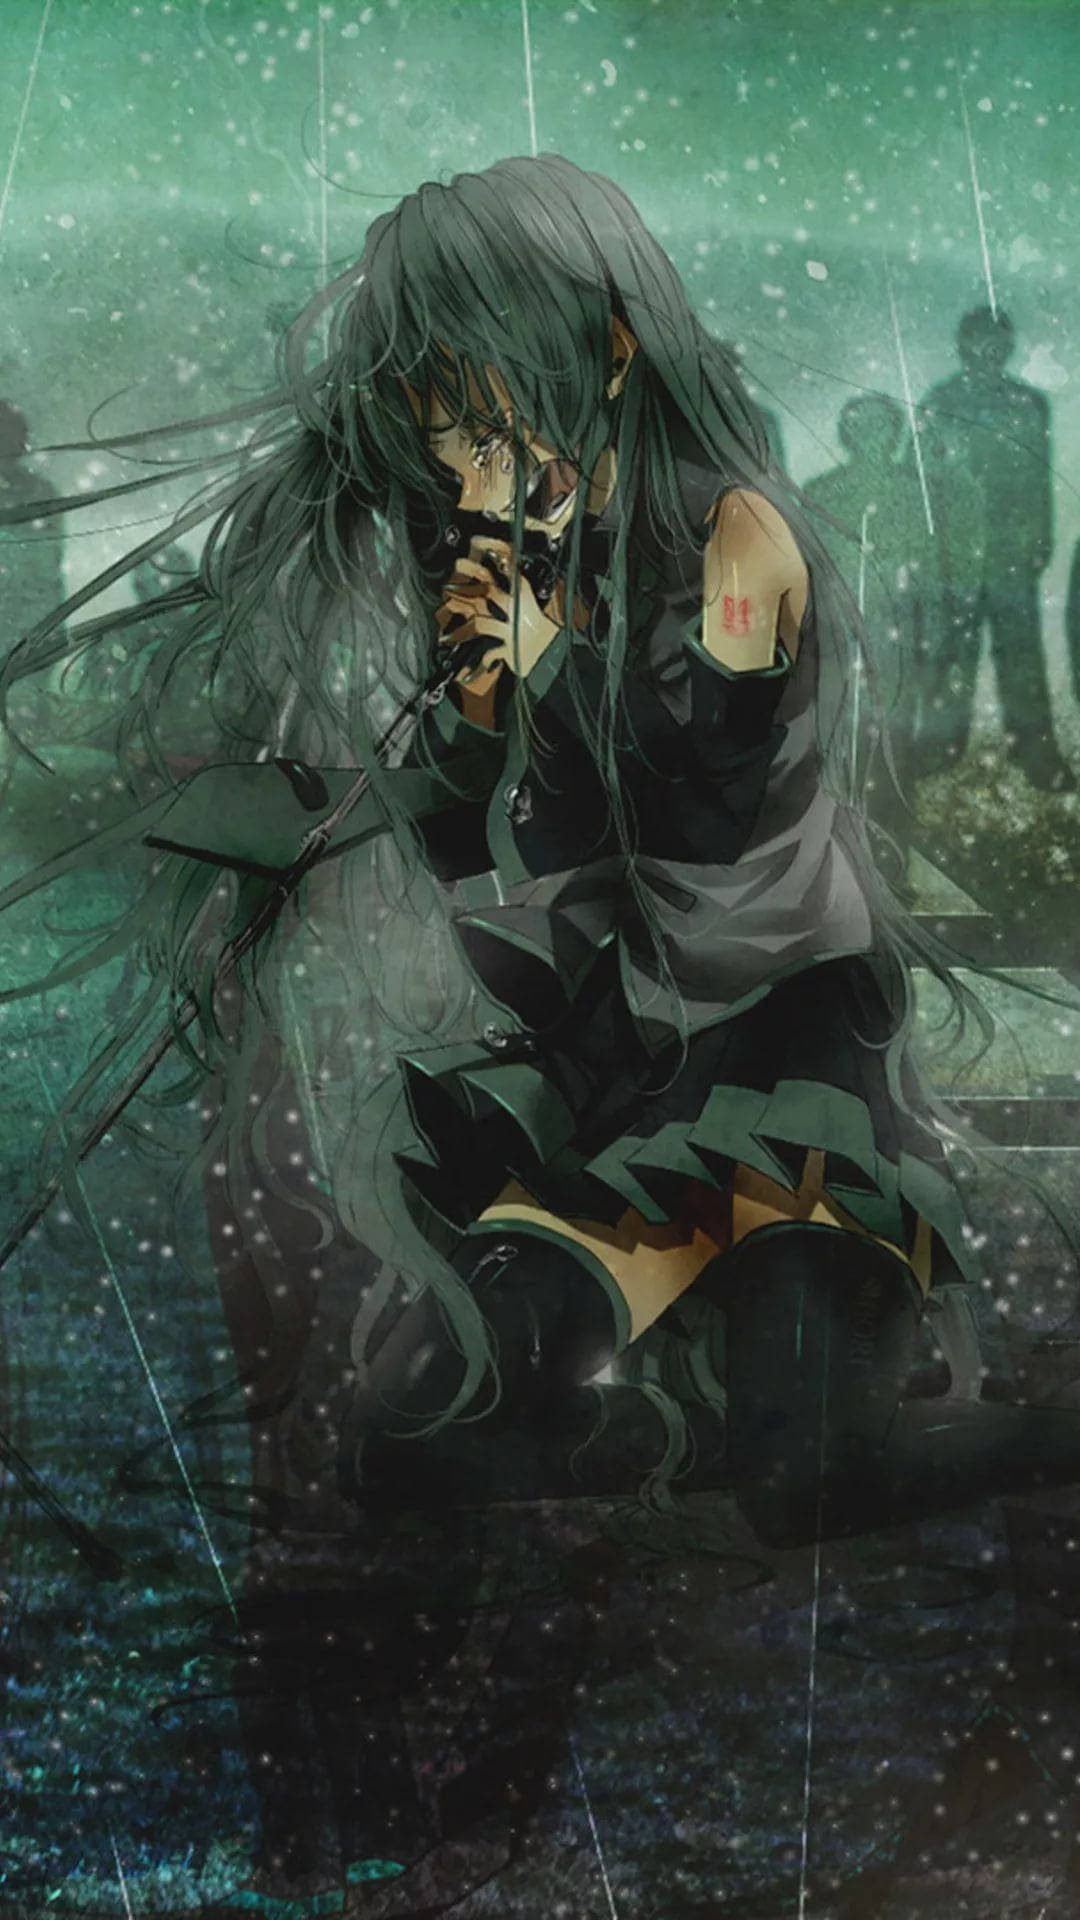 Sad Aesthetic Anime Girl In Rain Wallpaper